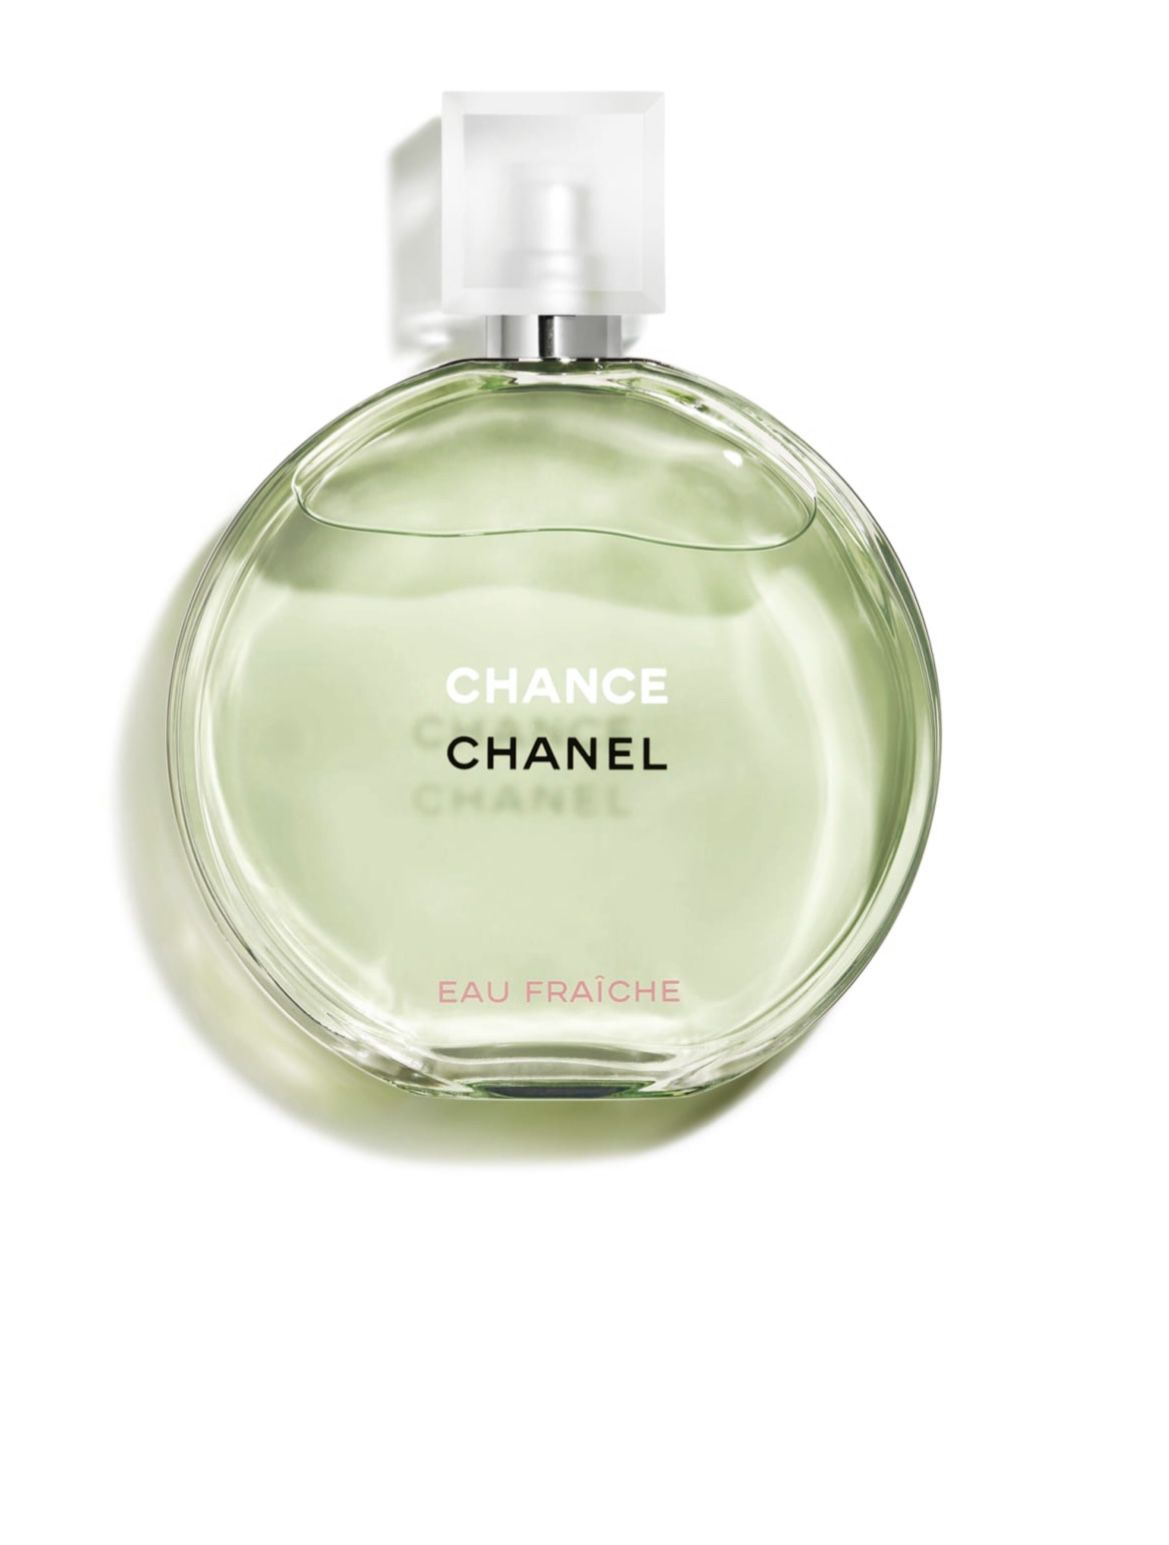 Chanel Chance Eau Fraiche Edt 3.4oz for Sale in Hollywood, FL - OfferUp